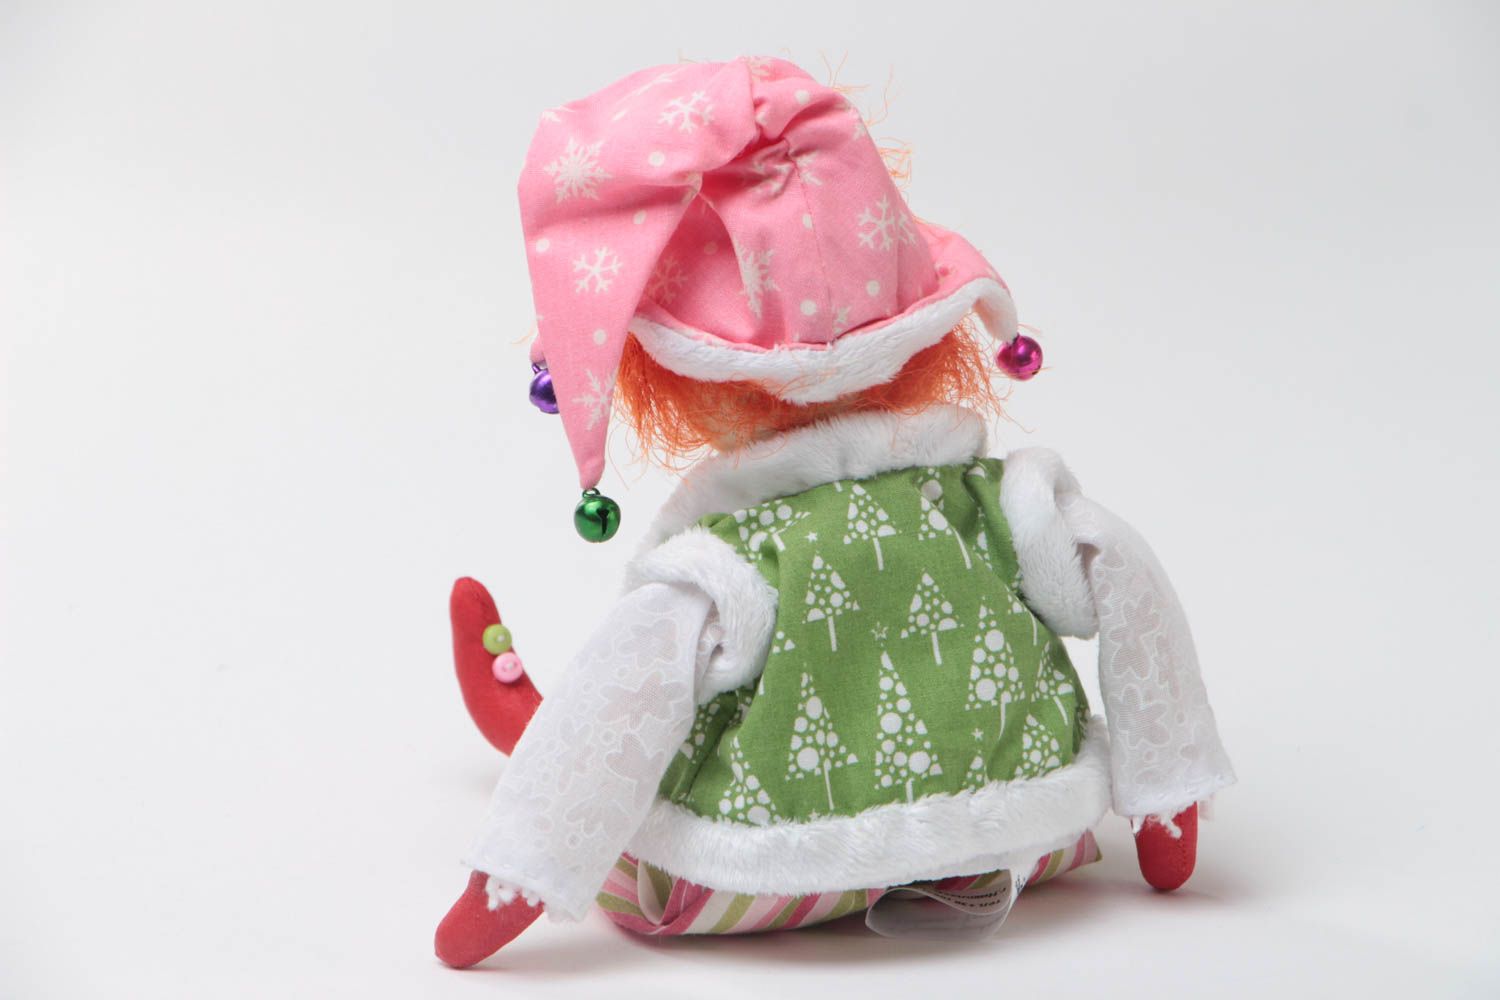 Handmade designer fabric soft toy in the shape of sad clown for interior decor photo 4